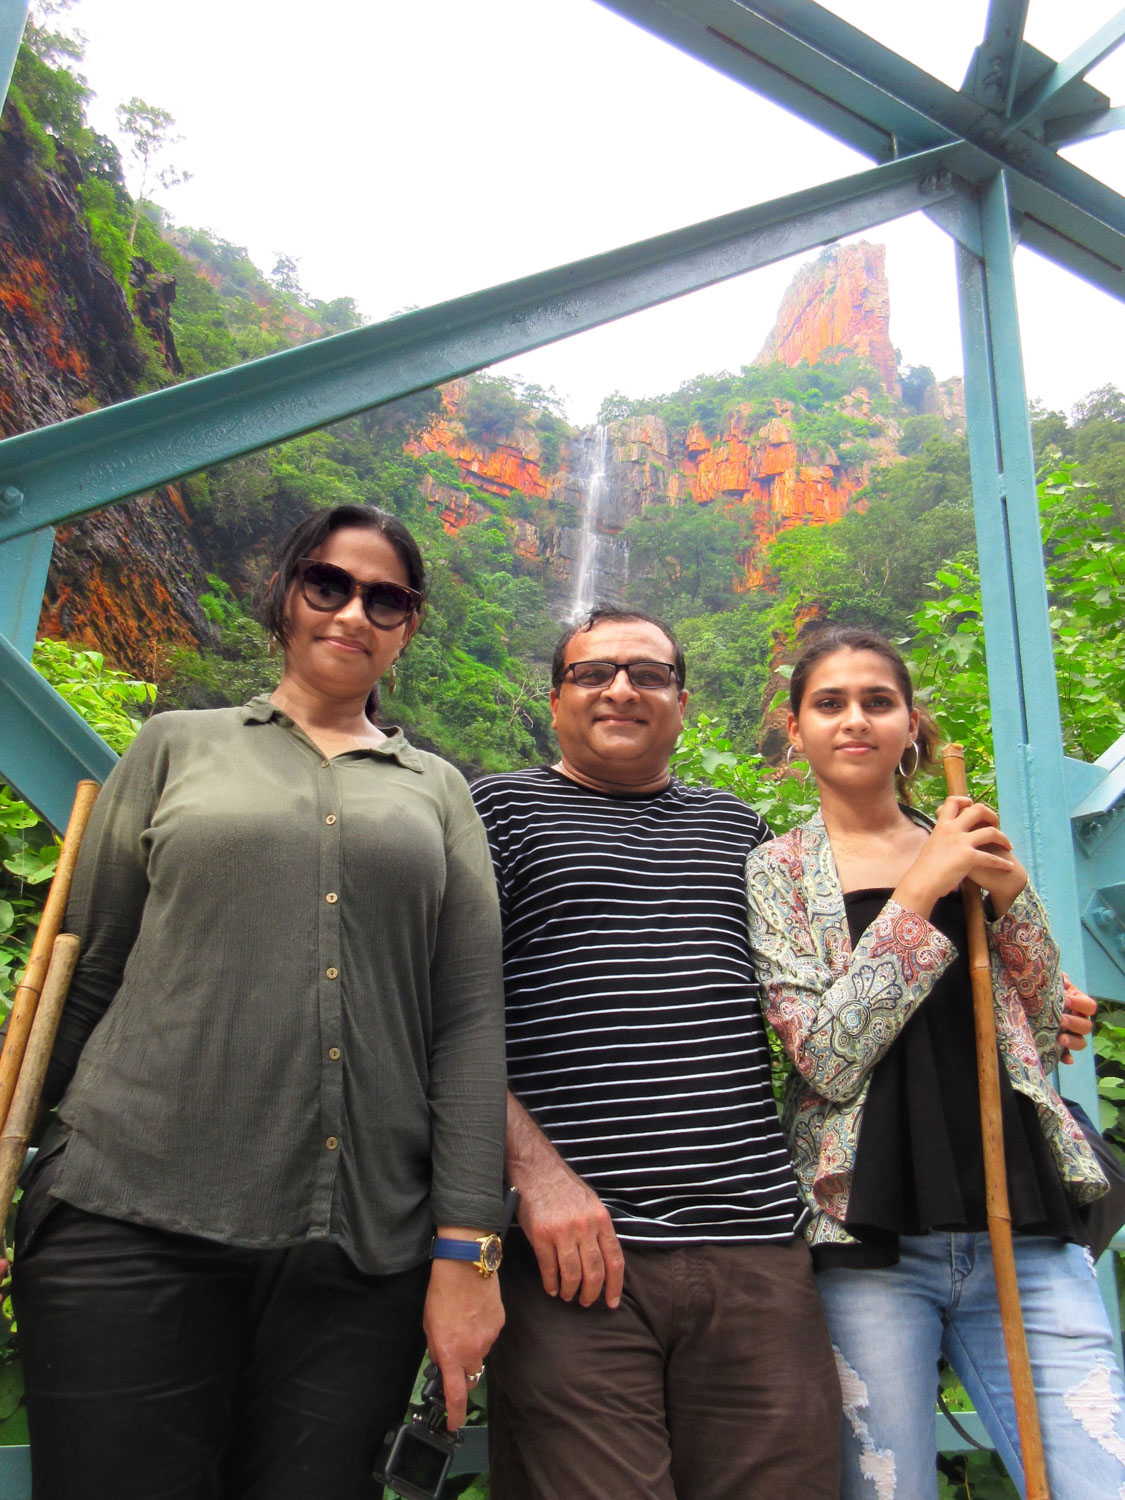 Trekking through Upper Ahobilam Temple with family